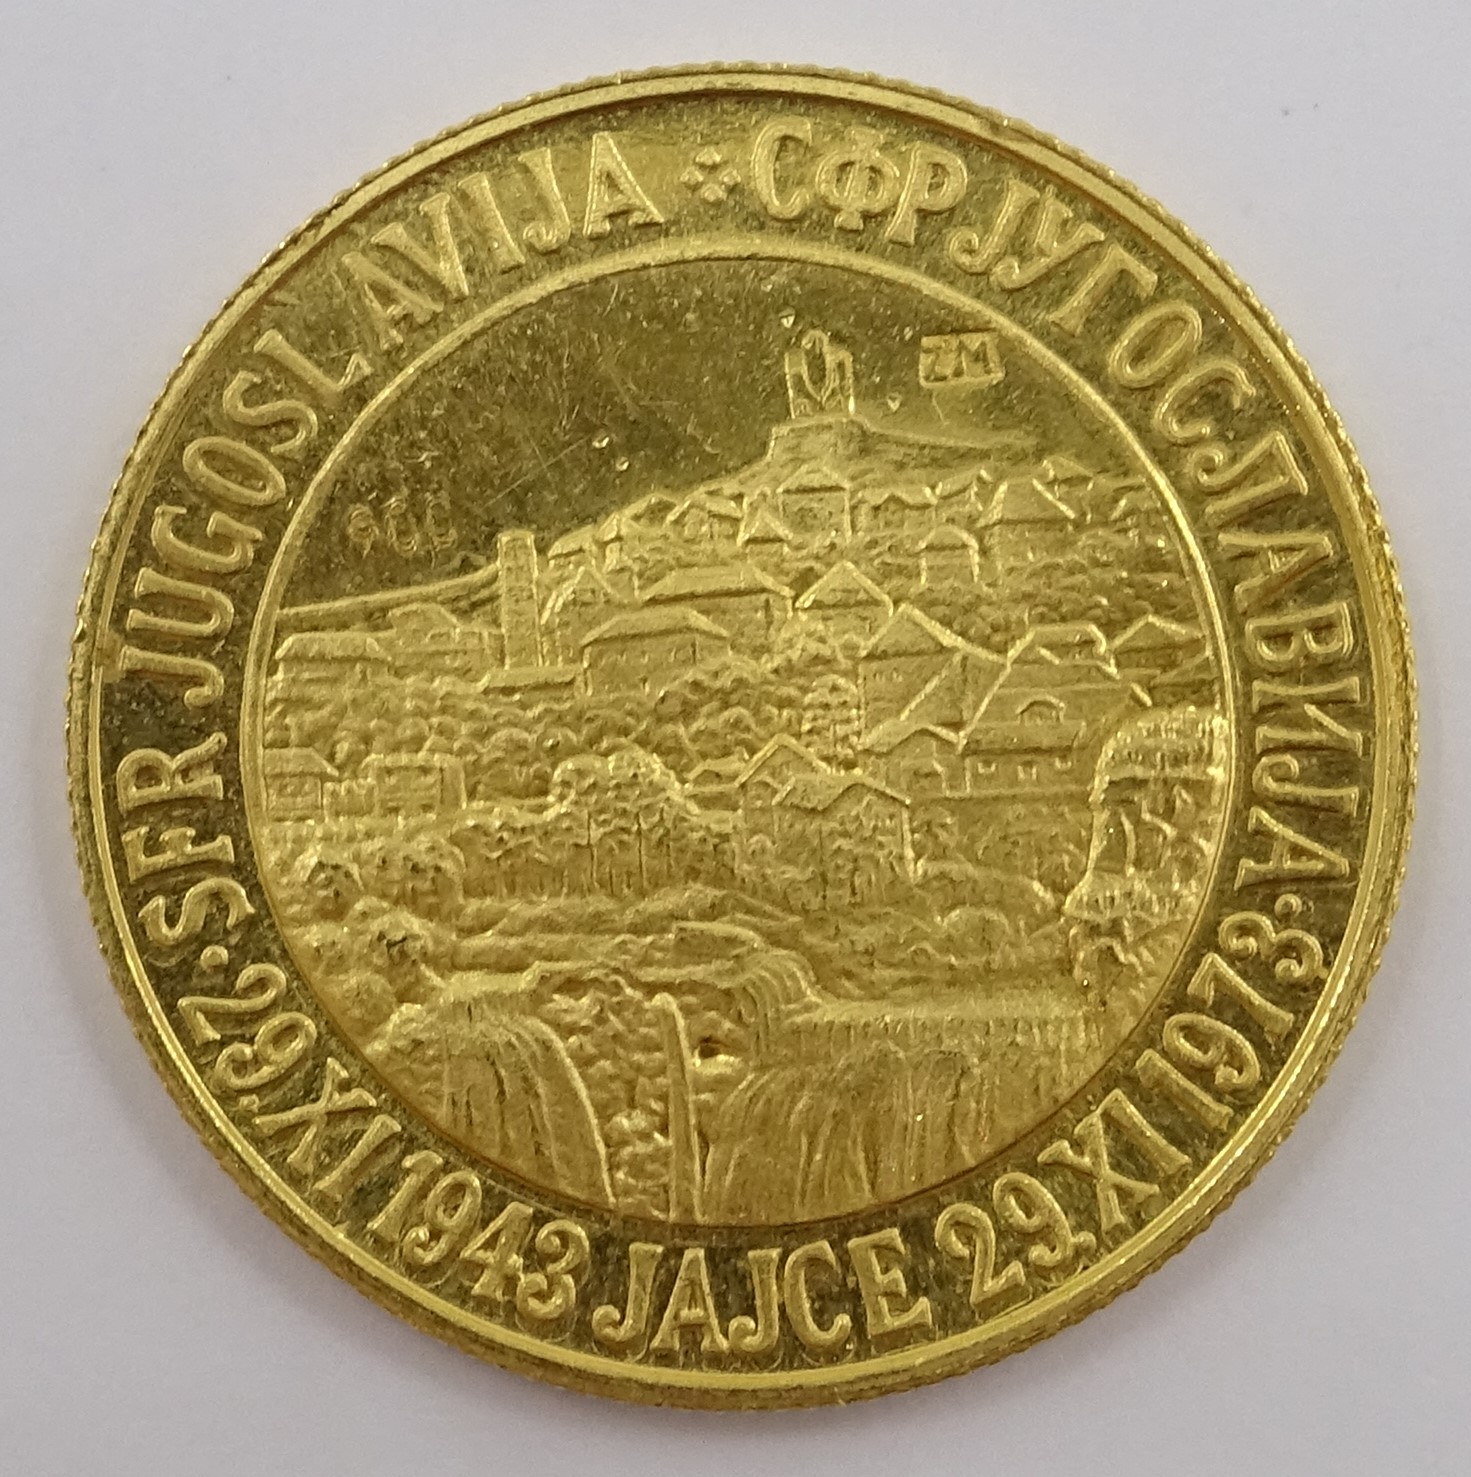 Yugoslavia 1973 gold medallion, commemorating Josip Broz Tito's term as Marshall of Yugoslavia, - Image 2 of 2